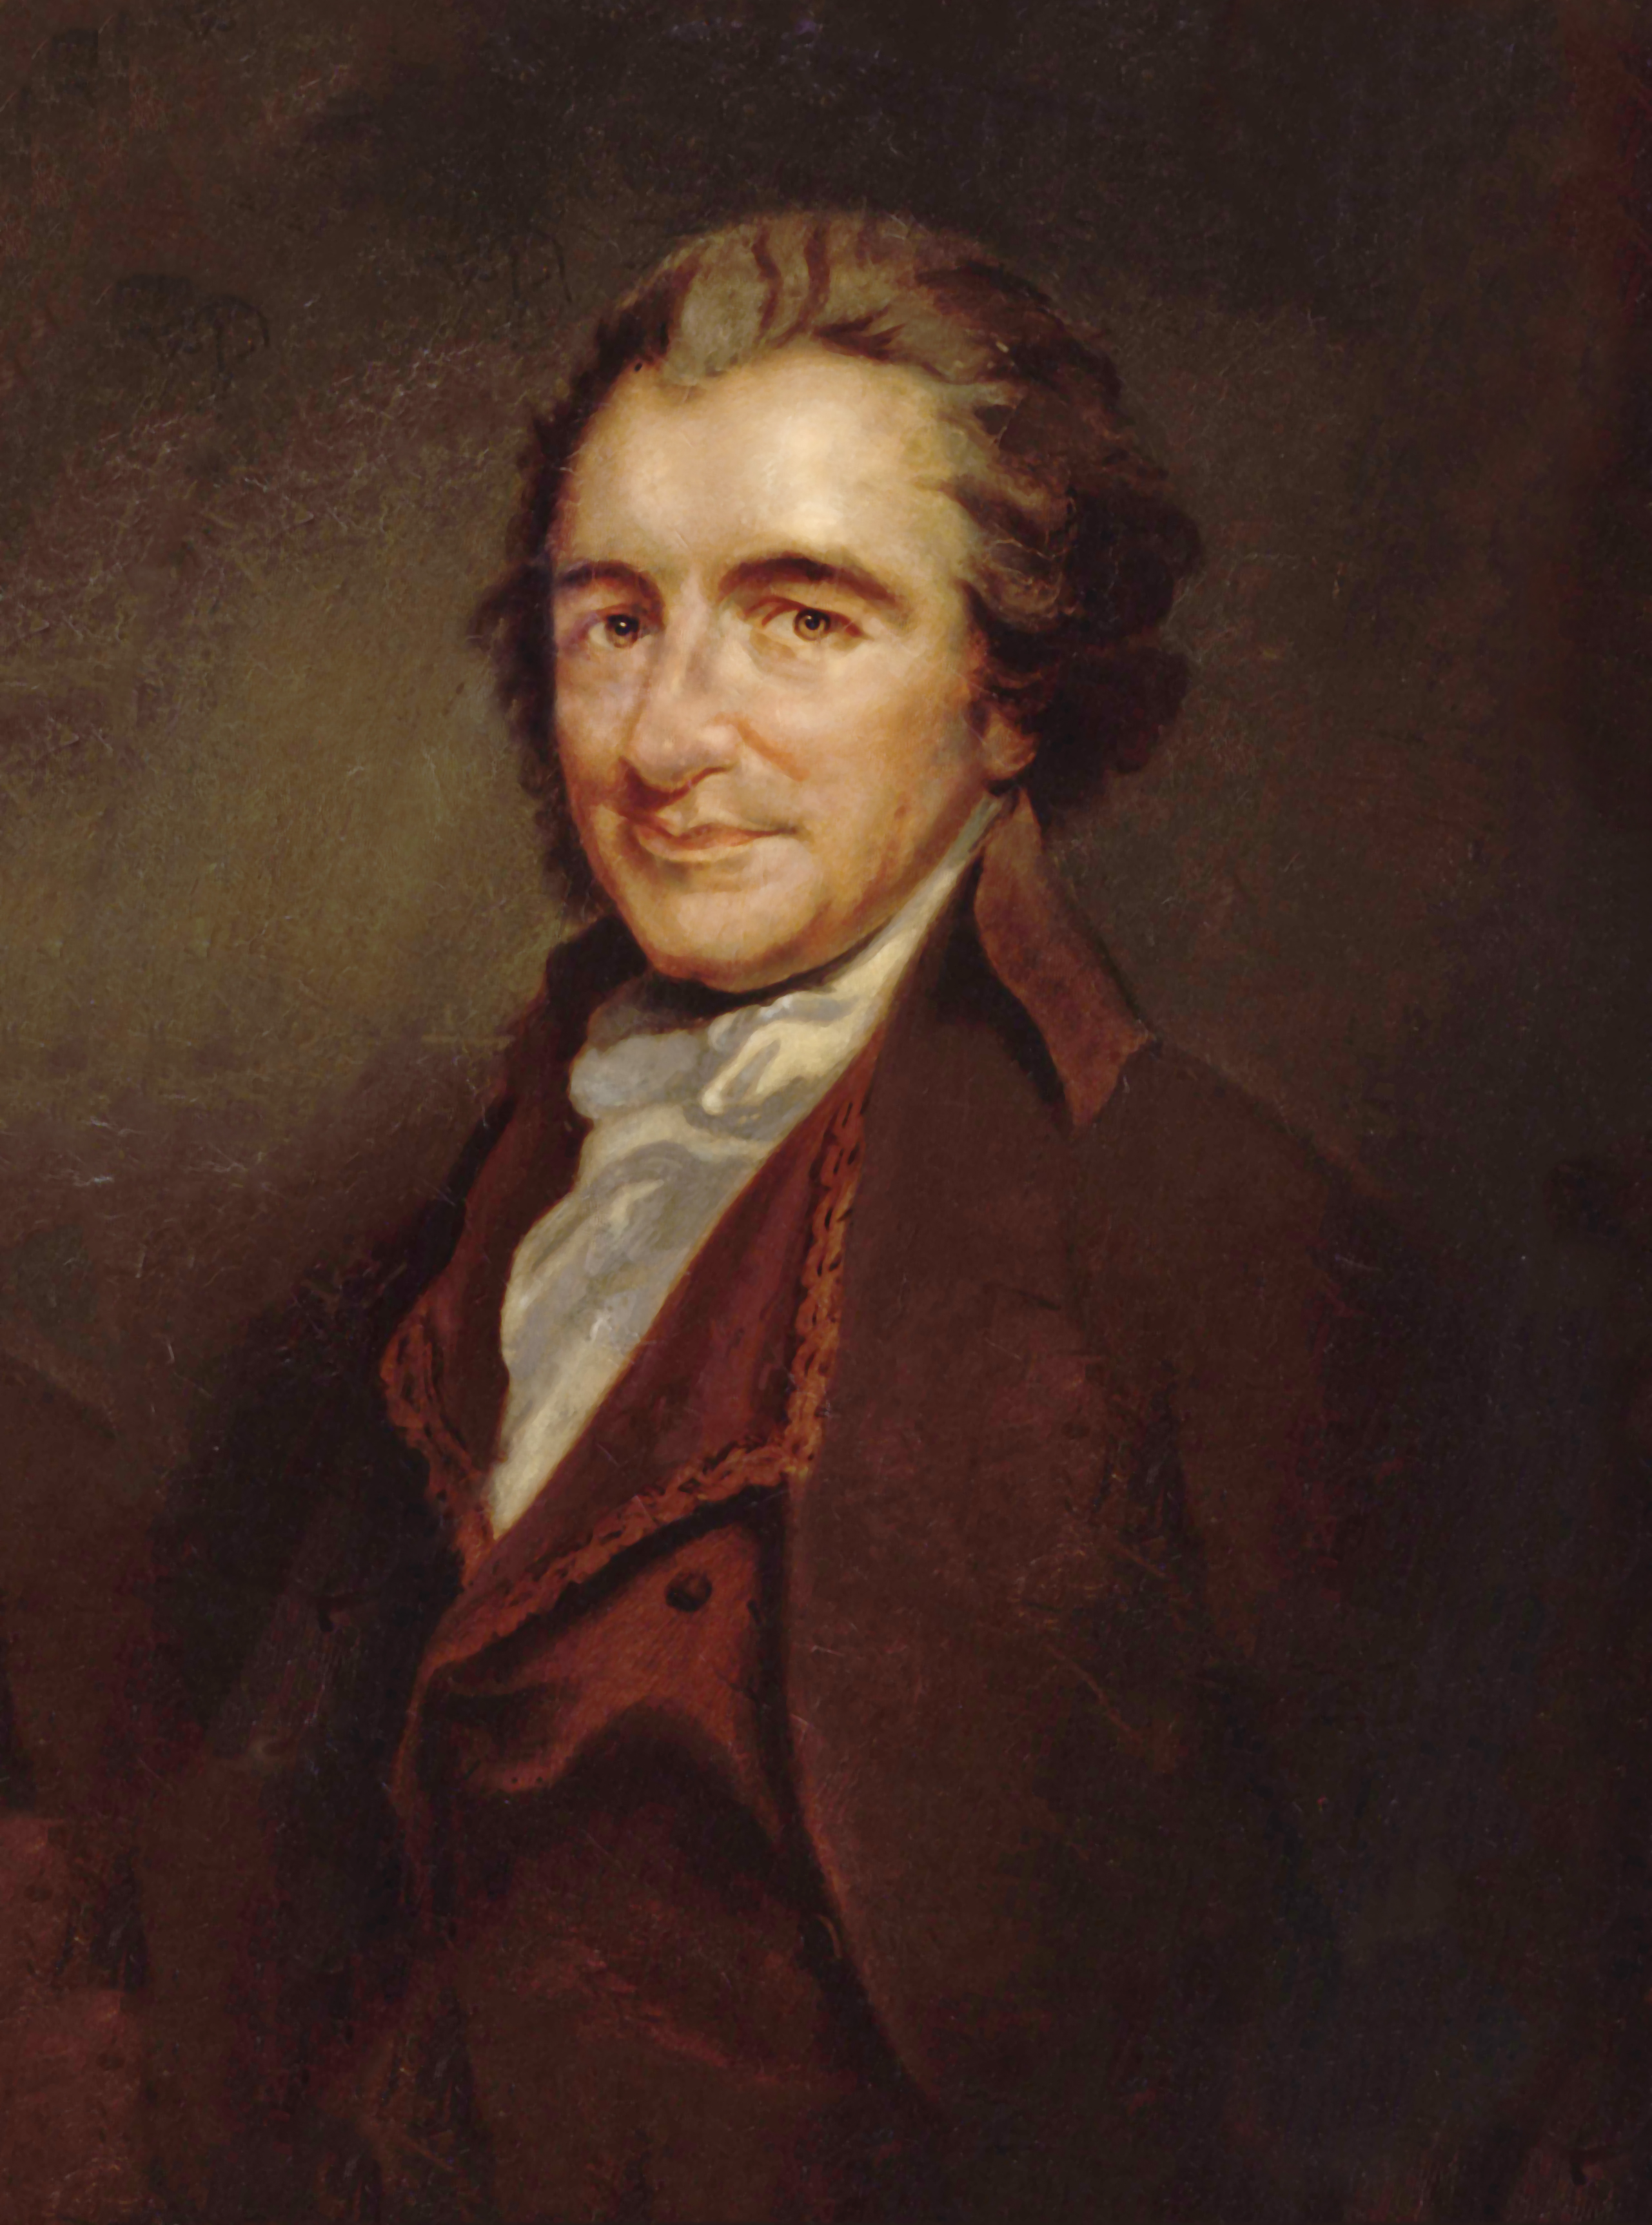 Image of Thomas Paine